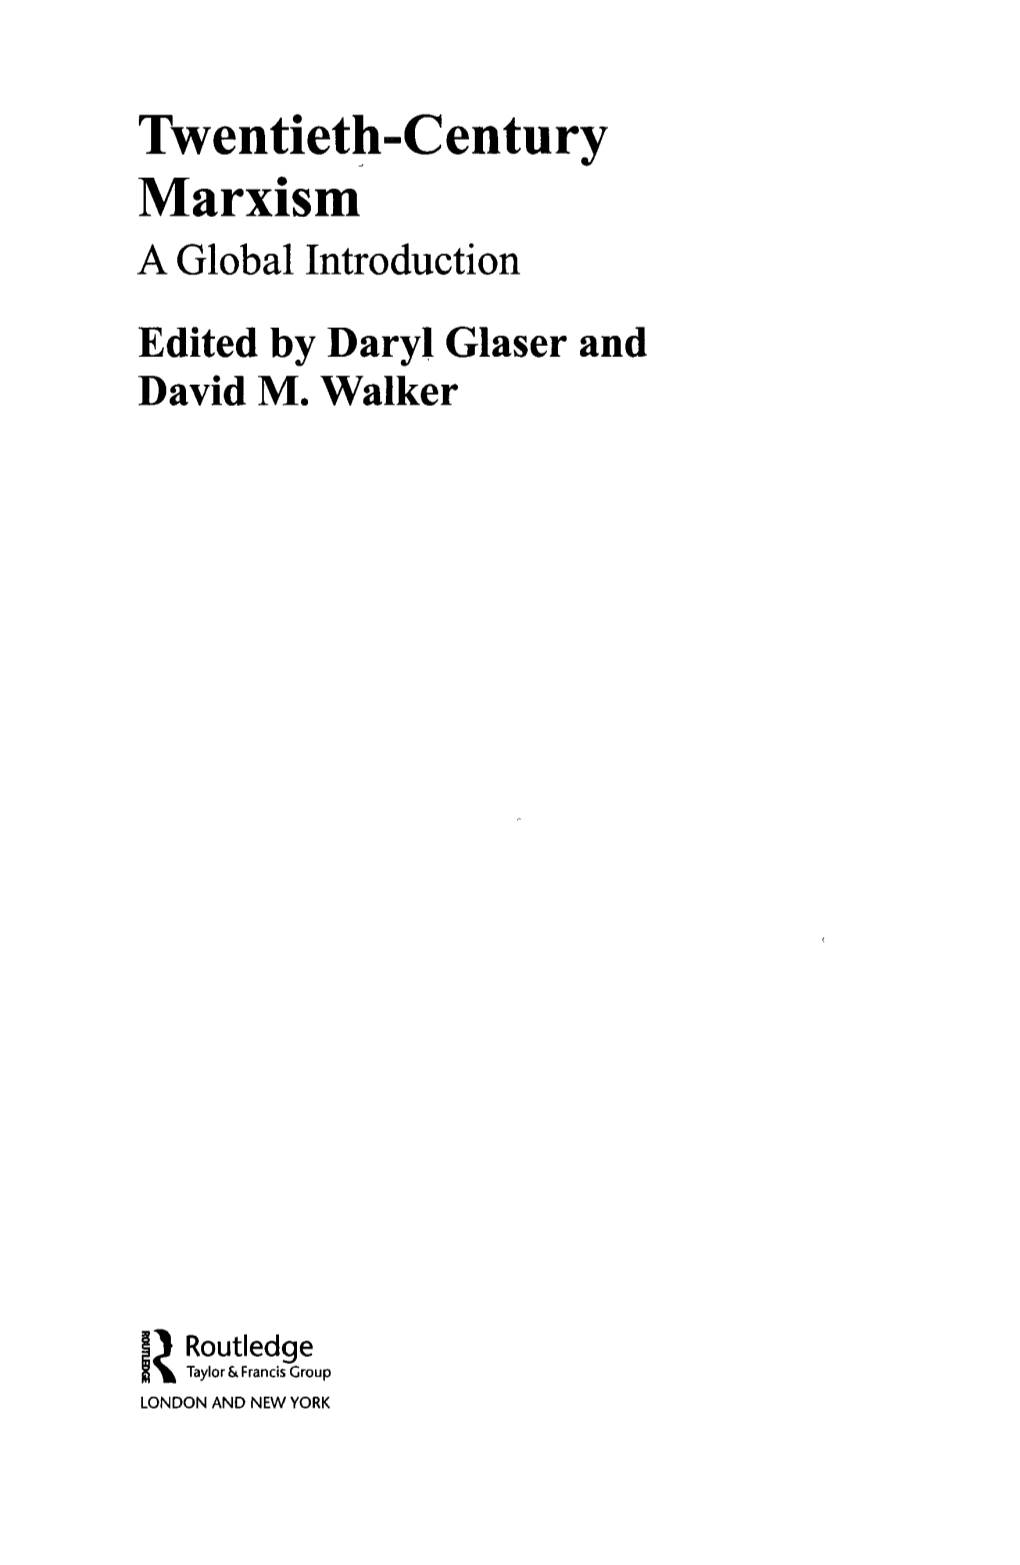 Twentieth-Century Marxism a Global Introduction Edited by Daryl Glaser and David M